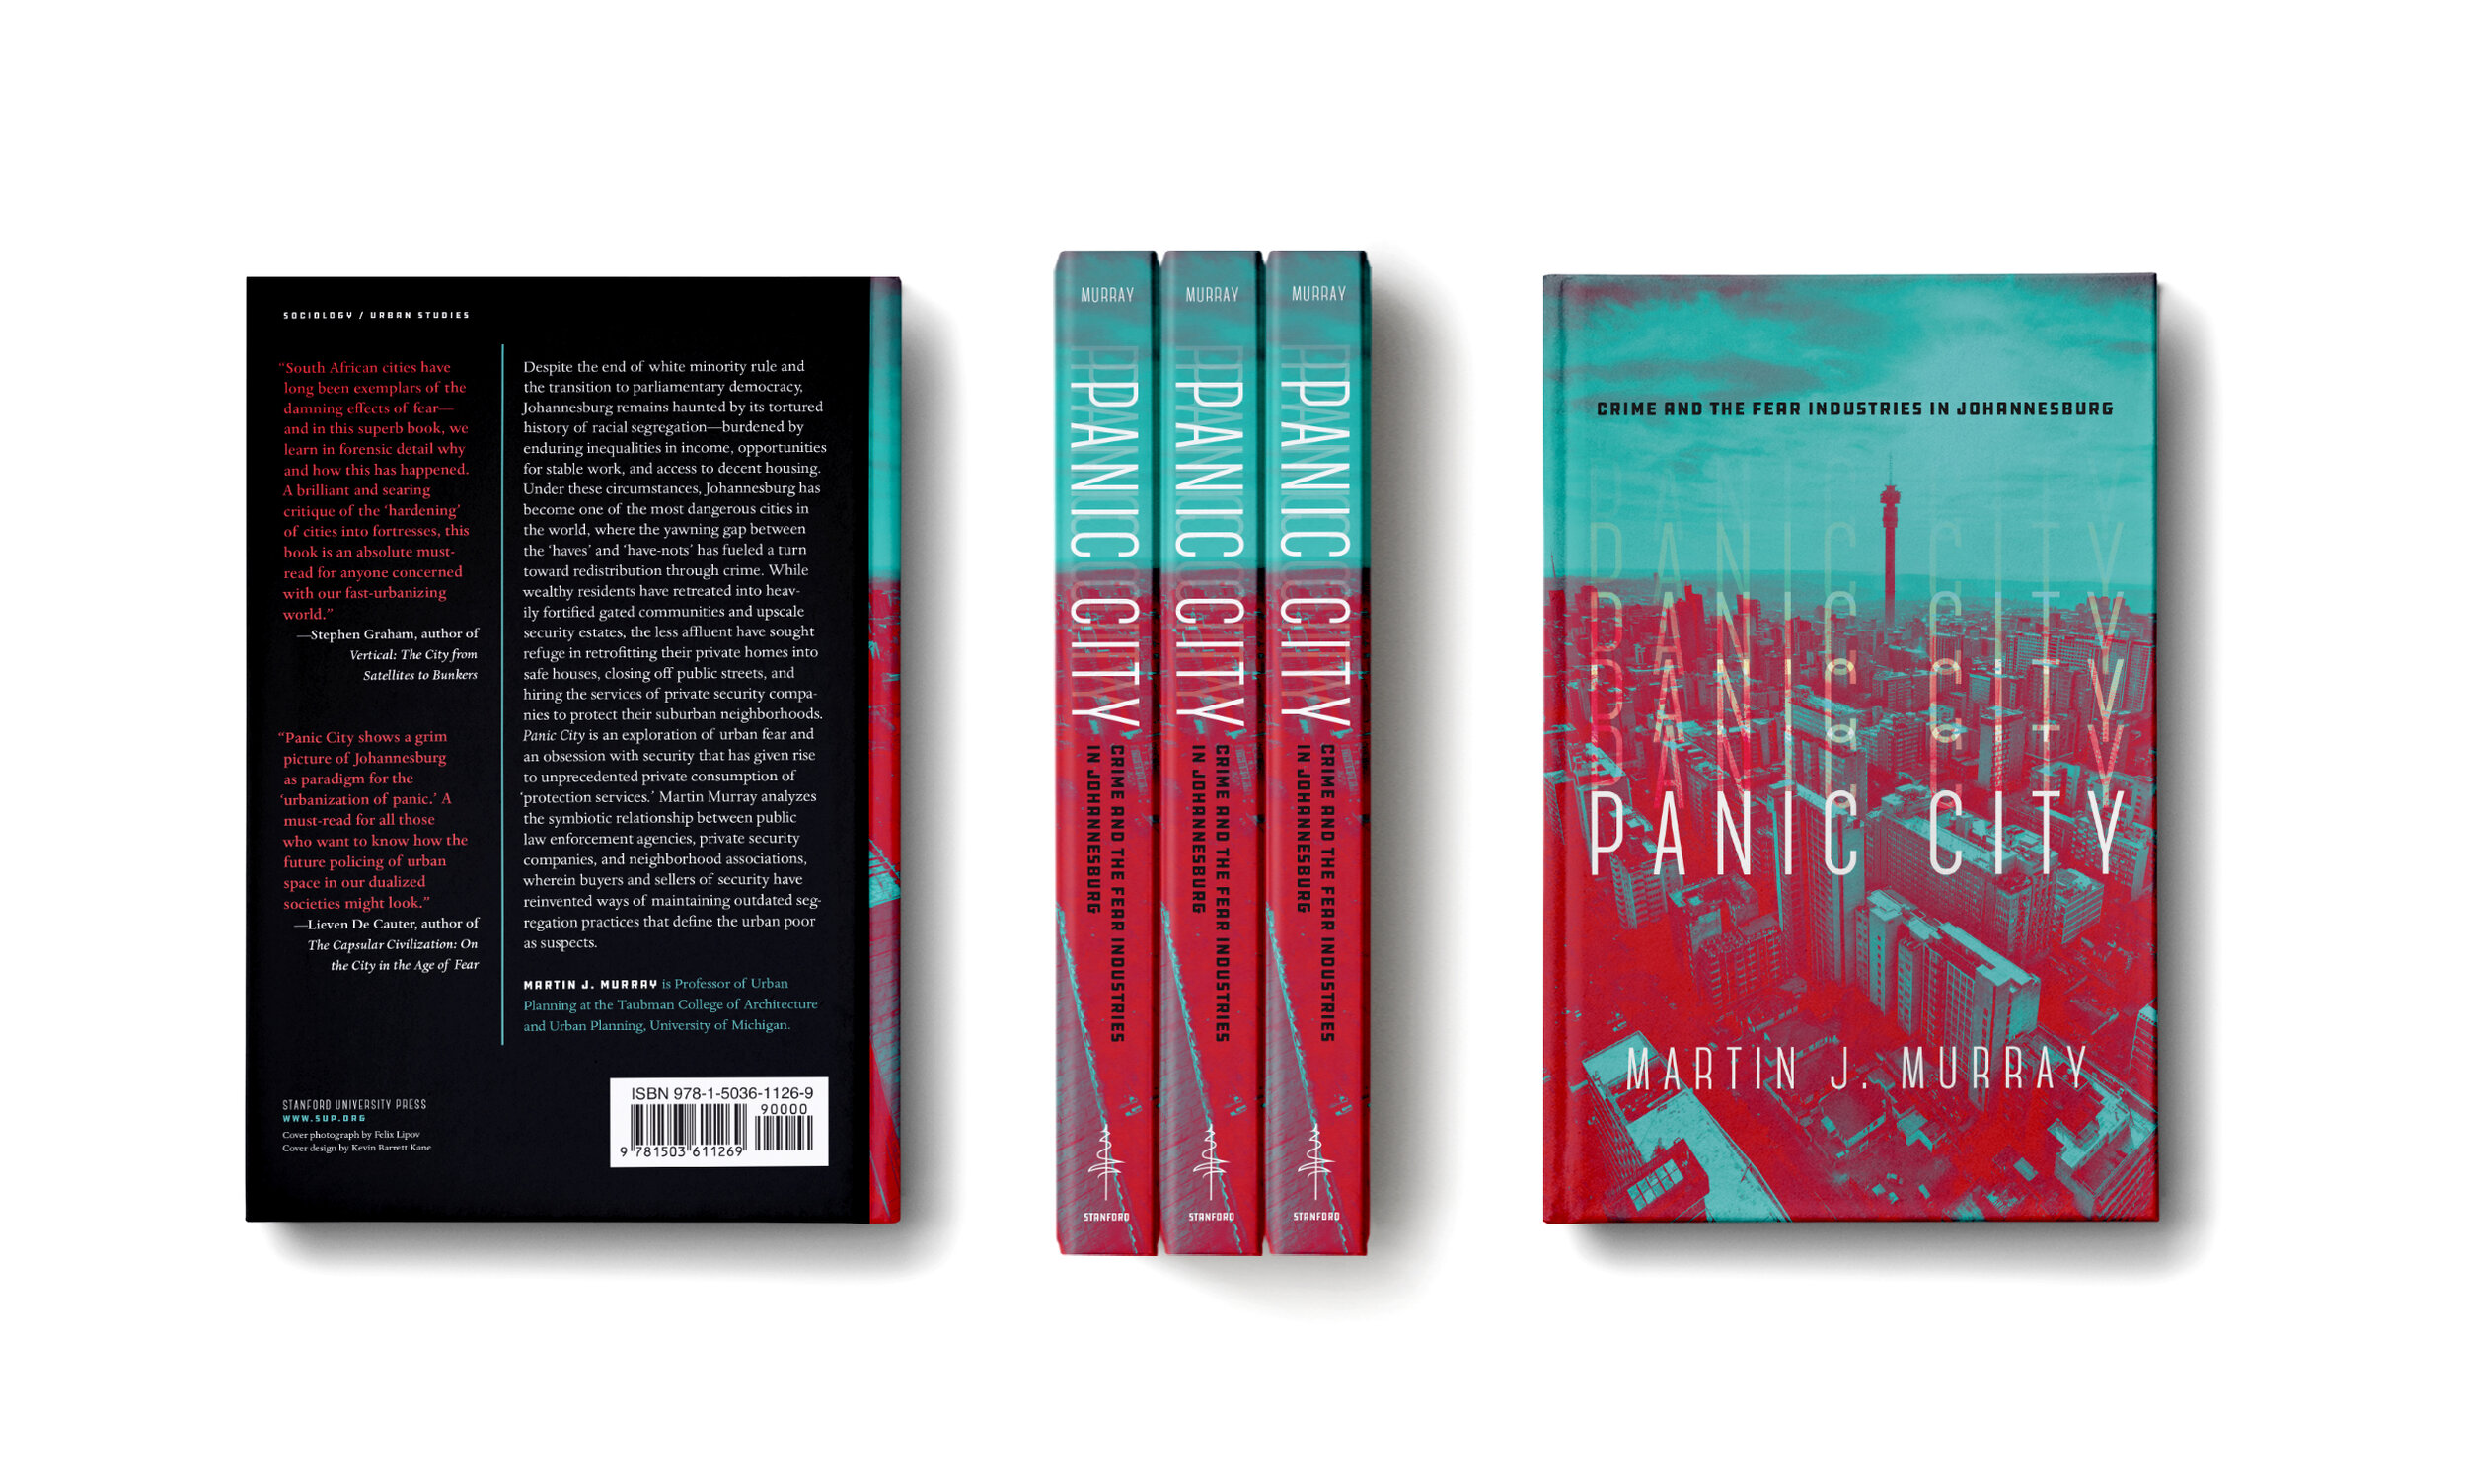 Panic City, by Martin J. Murray (Stanford, 2019)